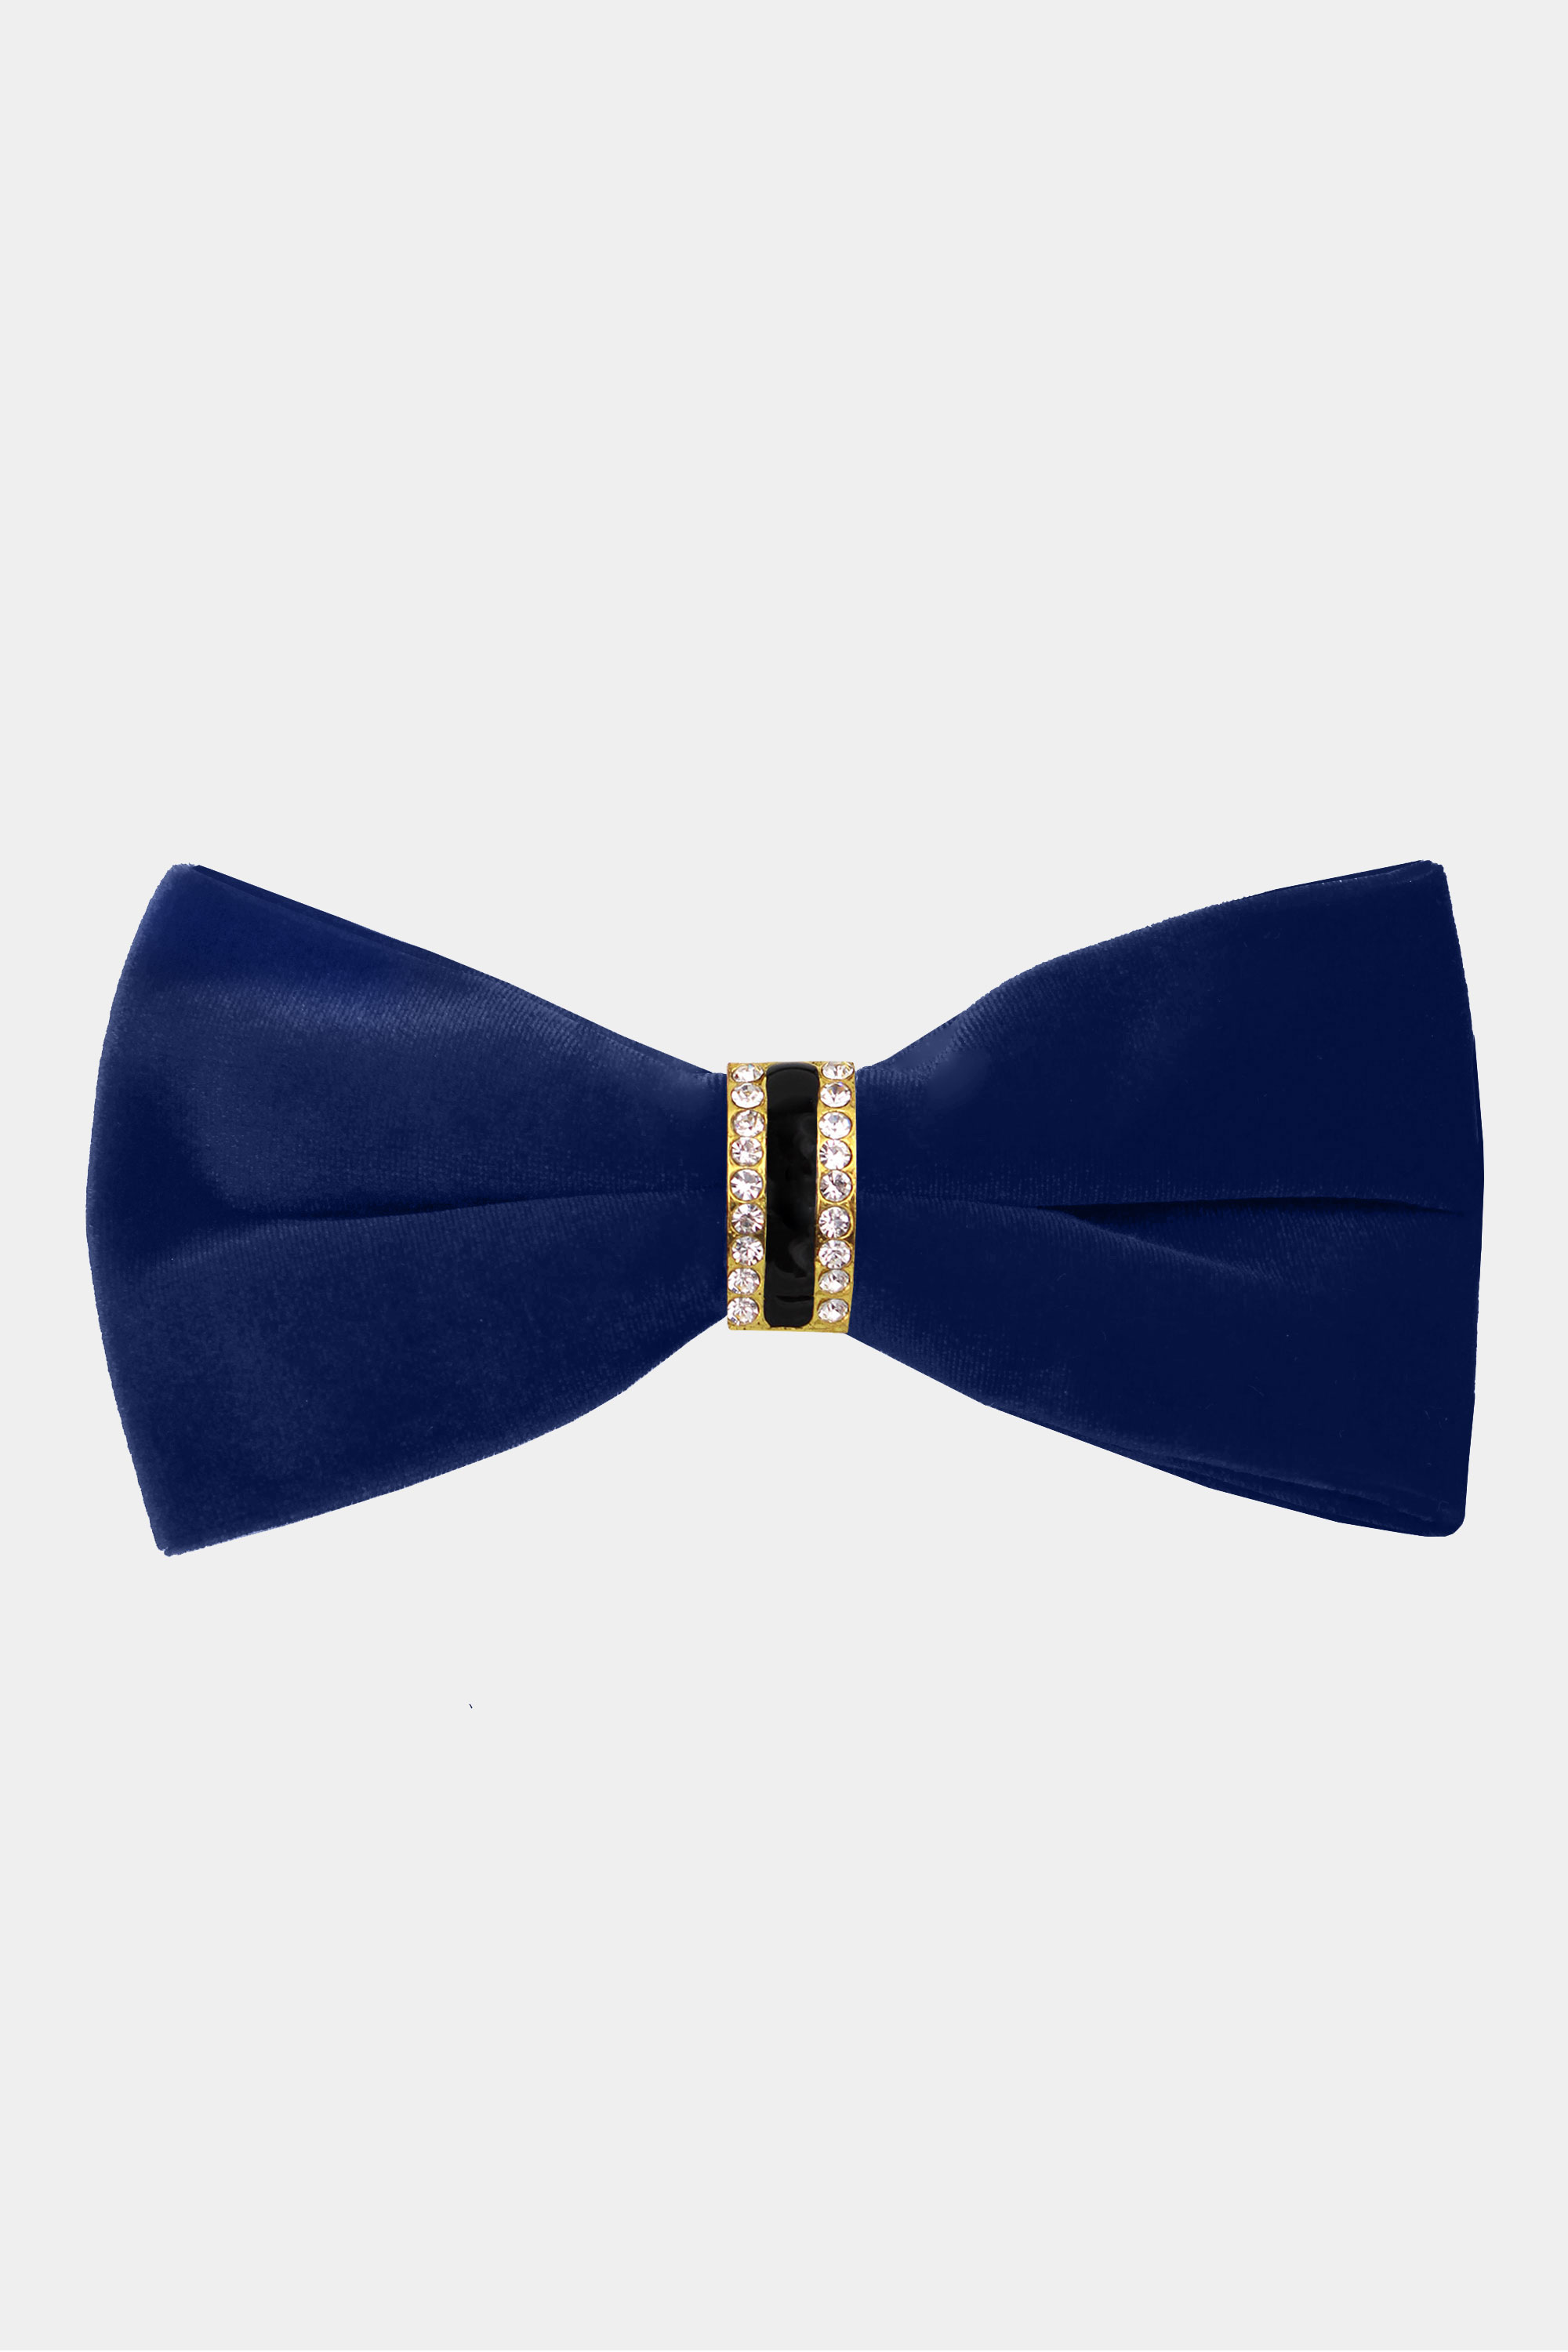 Mens-Navy-Blue-Velvet-Bow-Tie-Crystal-Luxury-Fancy-Bowtie-from-Gentlemansguru.com